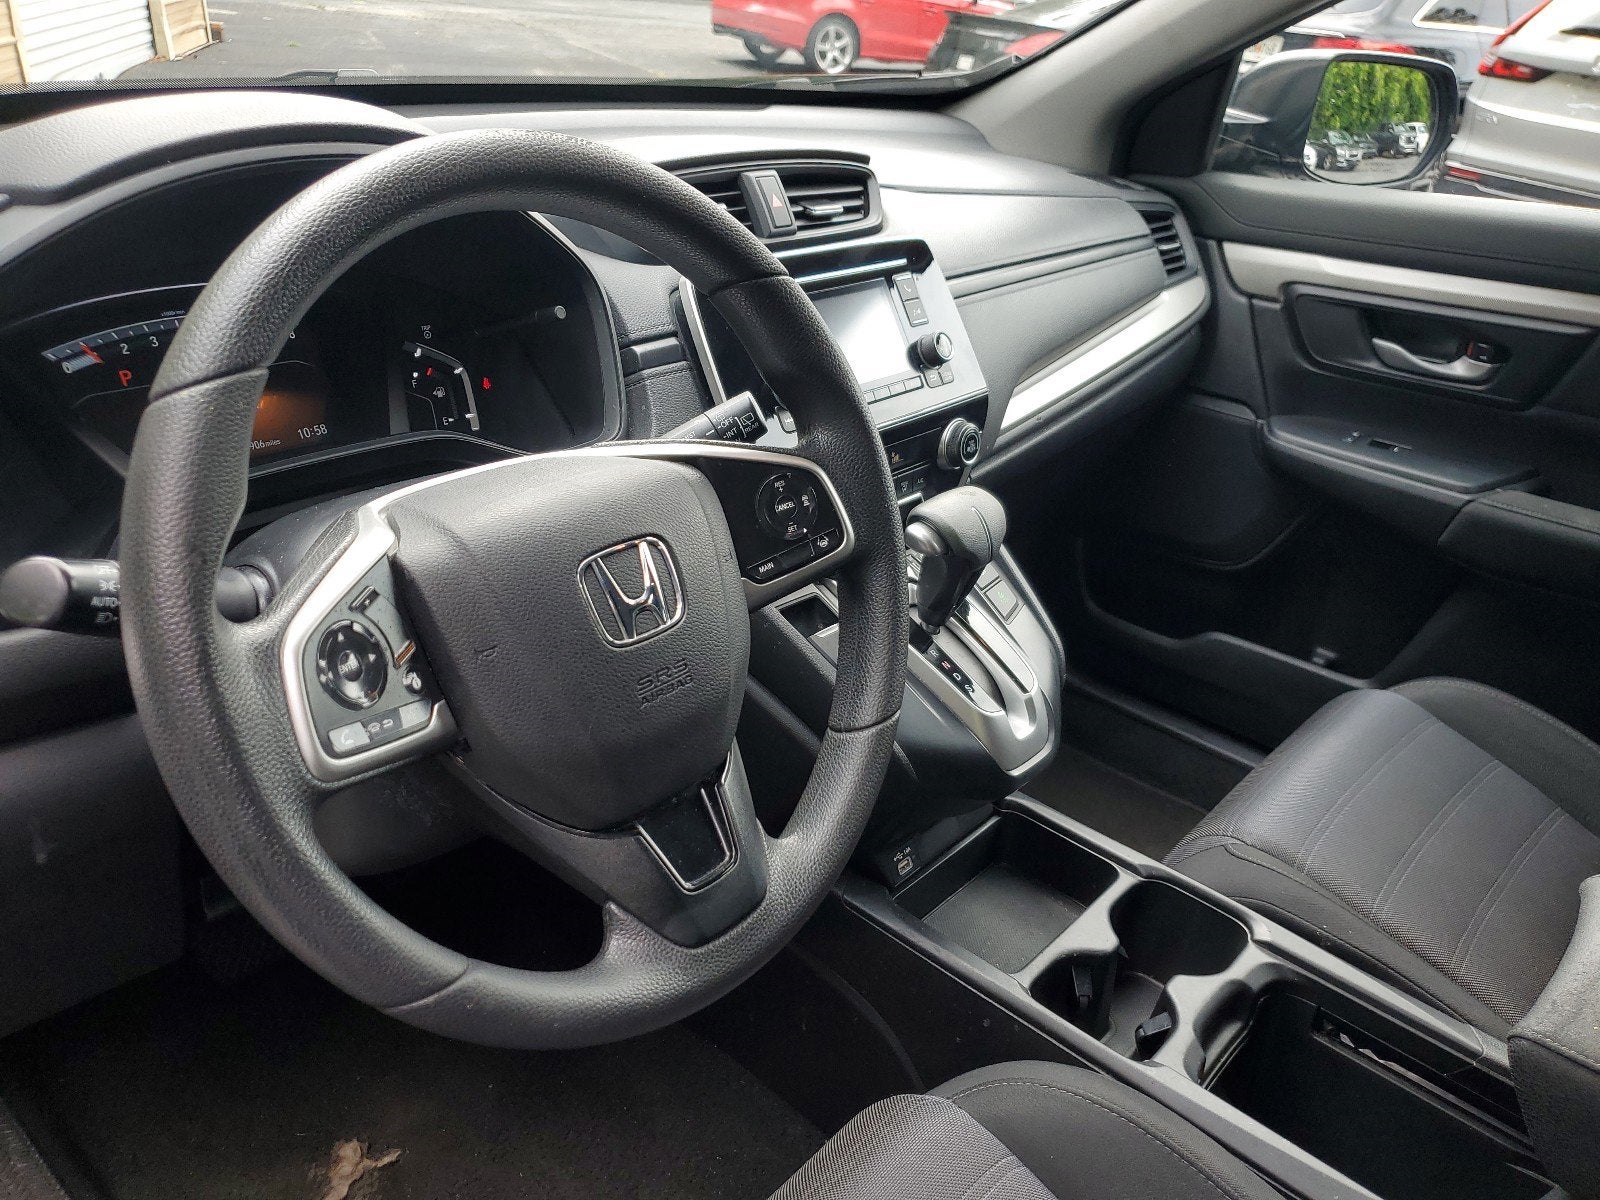 2021 Honda CR-V LX